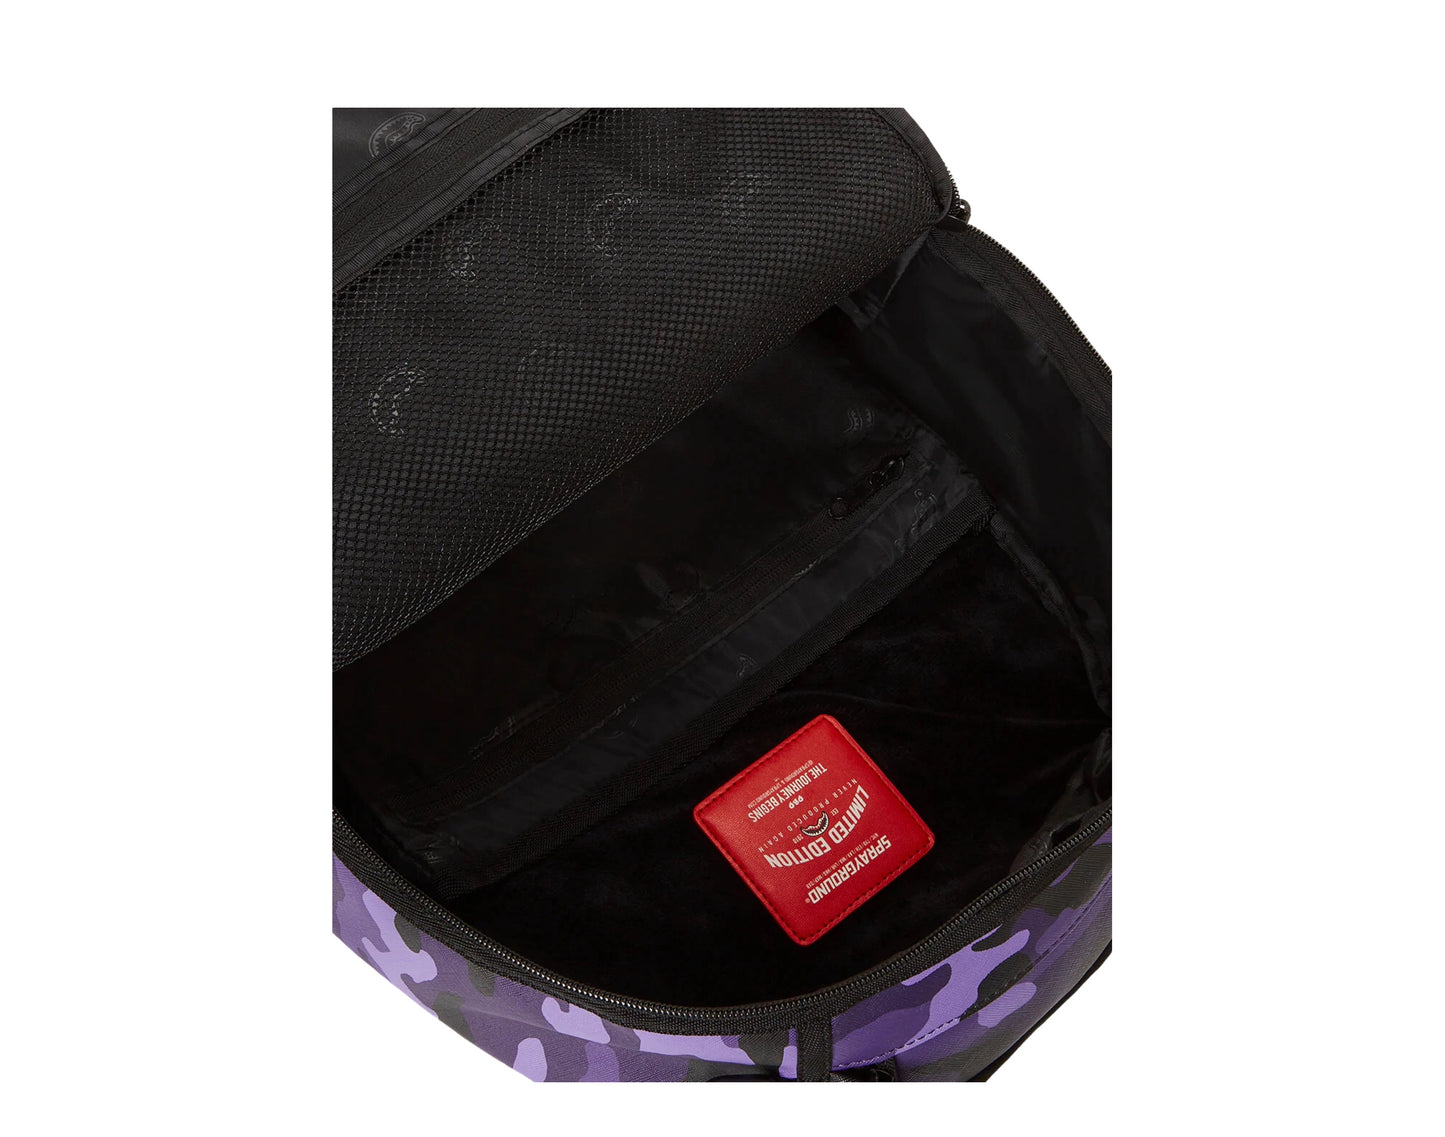 Sprayground XTC Purple Mountaineer (DLXV) Backpack - ShopperBoard